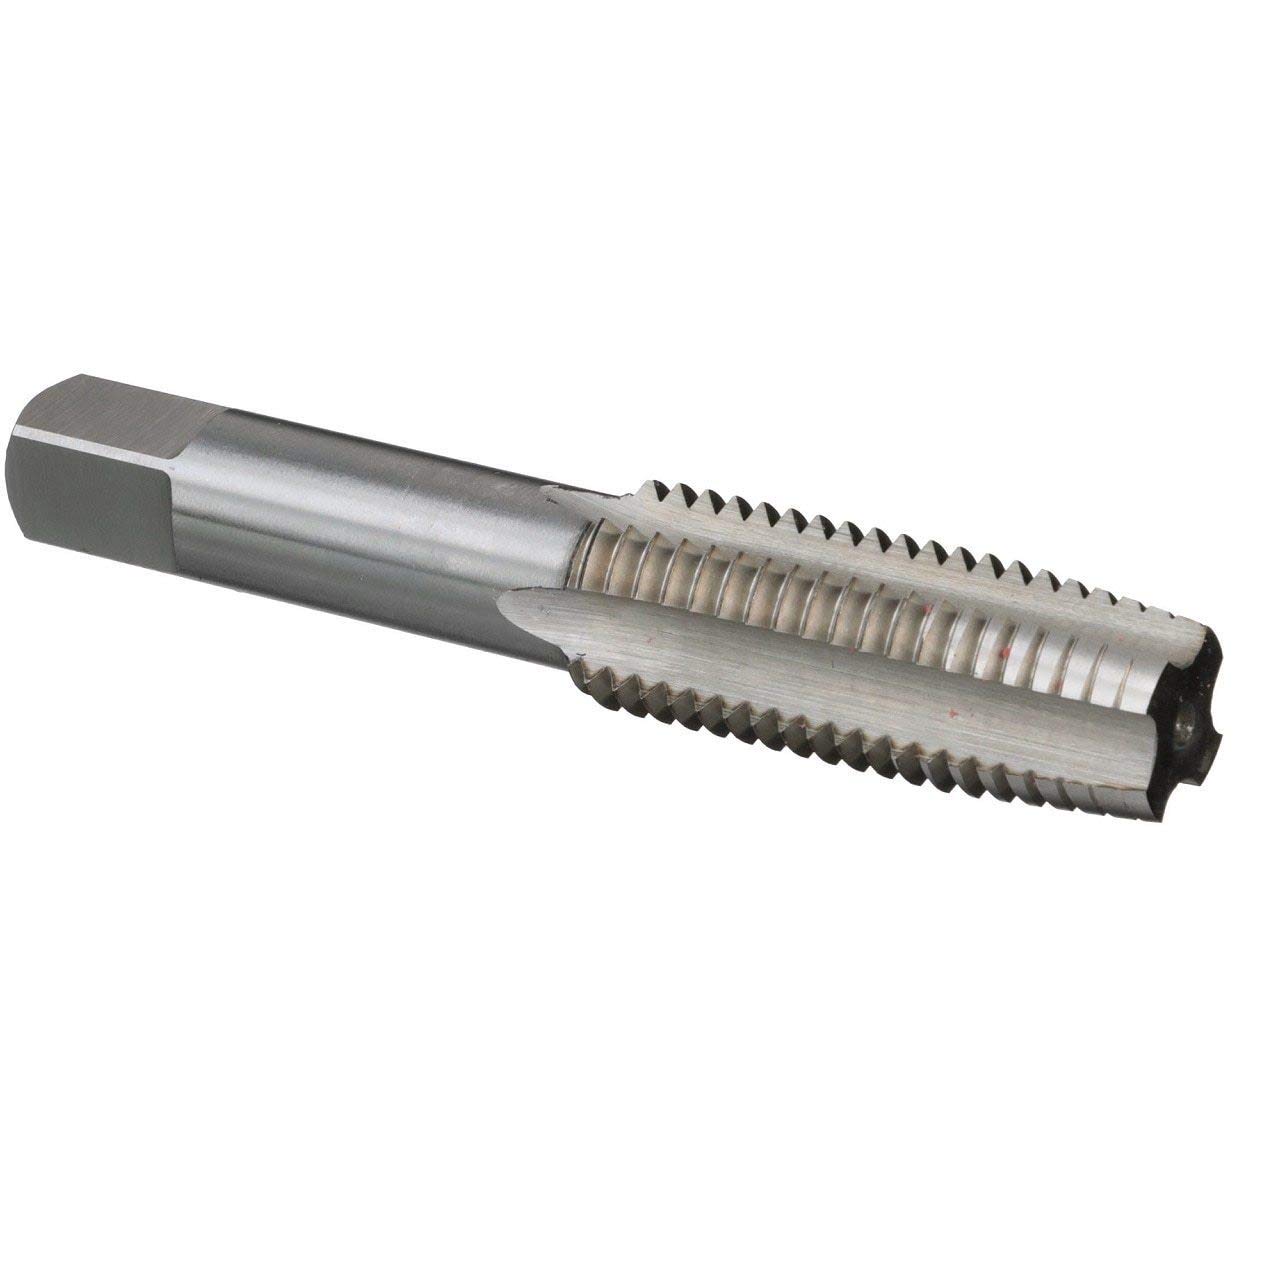 Drill America 1132-40 UNS High Speed Steel Plug Tap Pack of 12並行輸入品